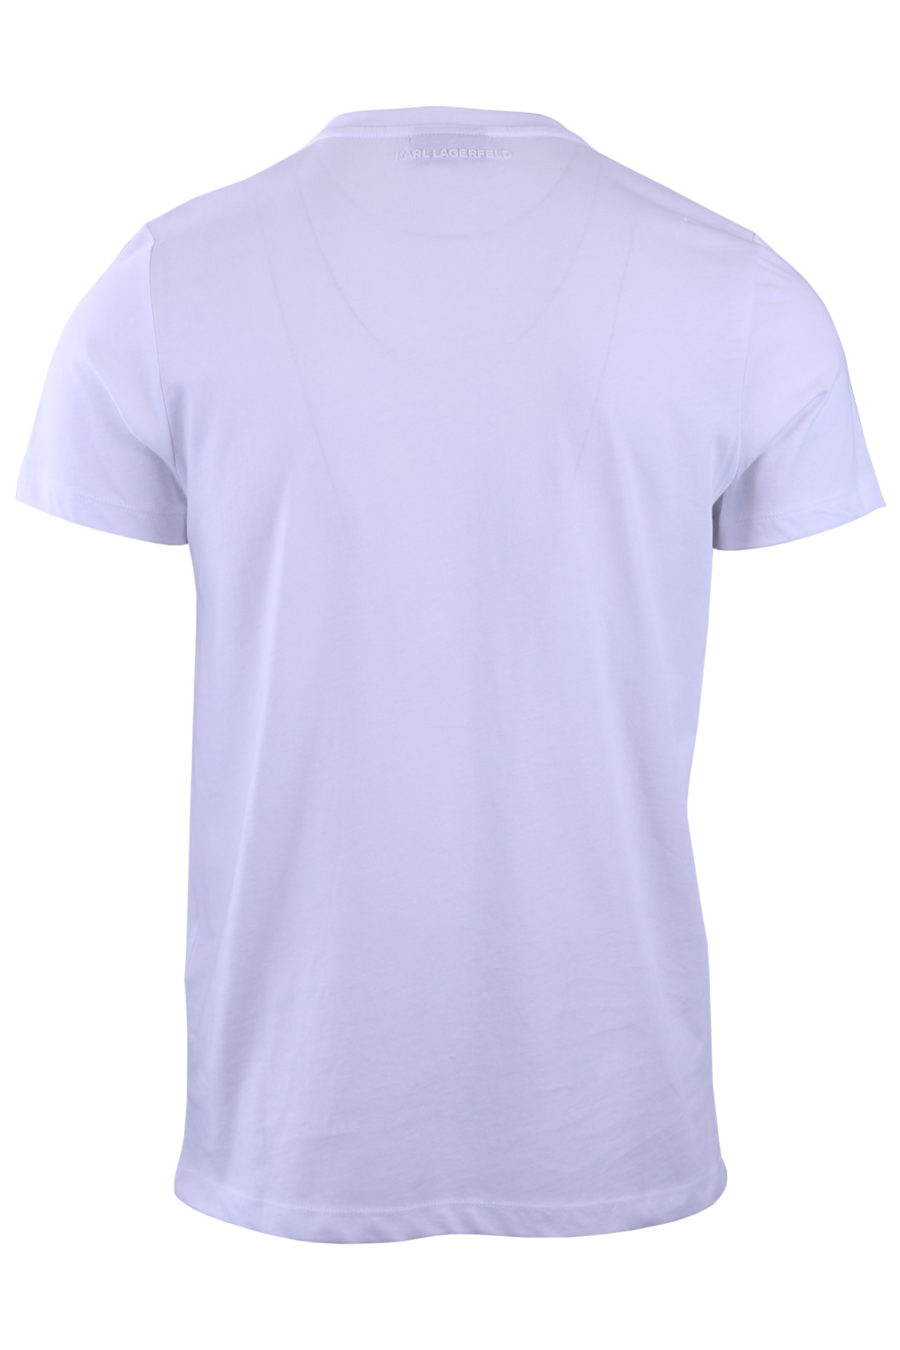 T-shirt blanc avec profil Karl argenté - 7c5495990f27502af52510b72a52aff9cffc4c41